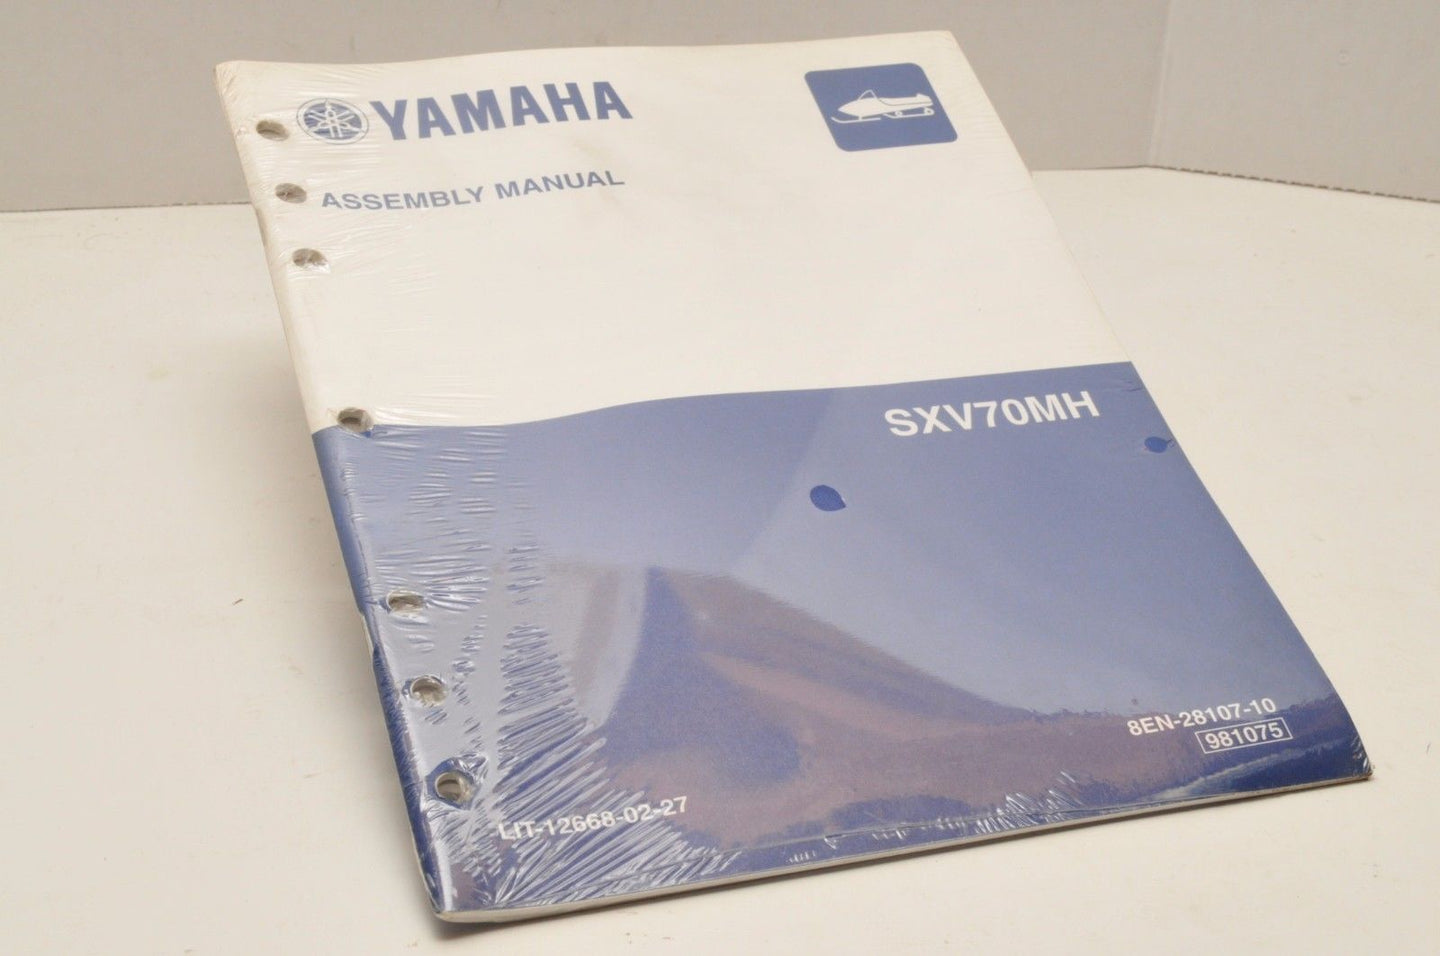 Genuine Yamaha FACTORY ASSEMBLY SETUP INSTRUCTION MANUAL SXV70MH LIT-12668-02-27